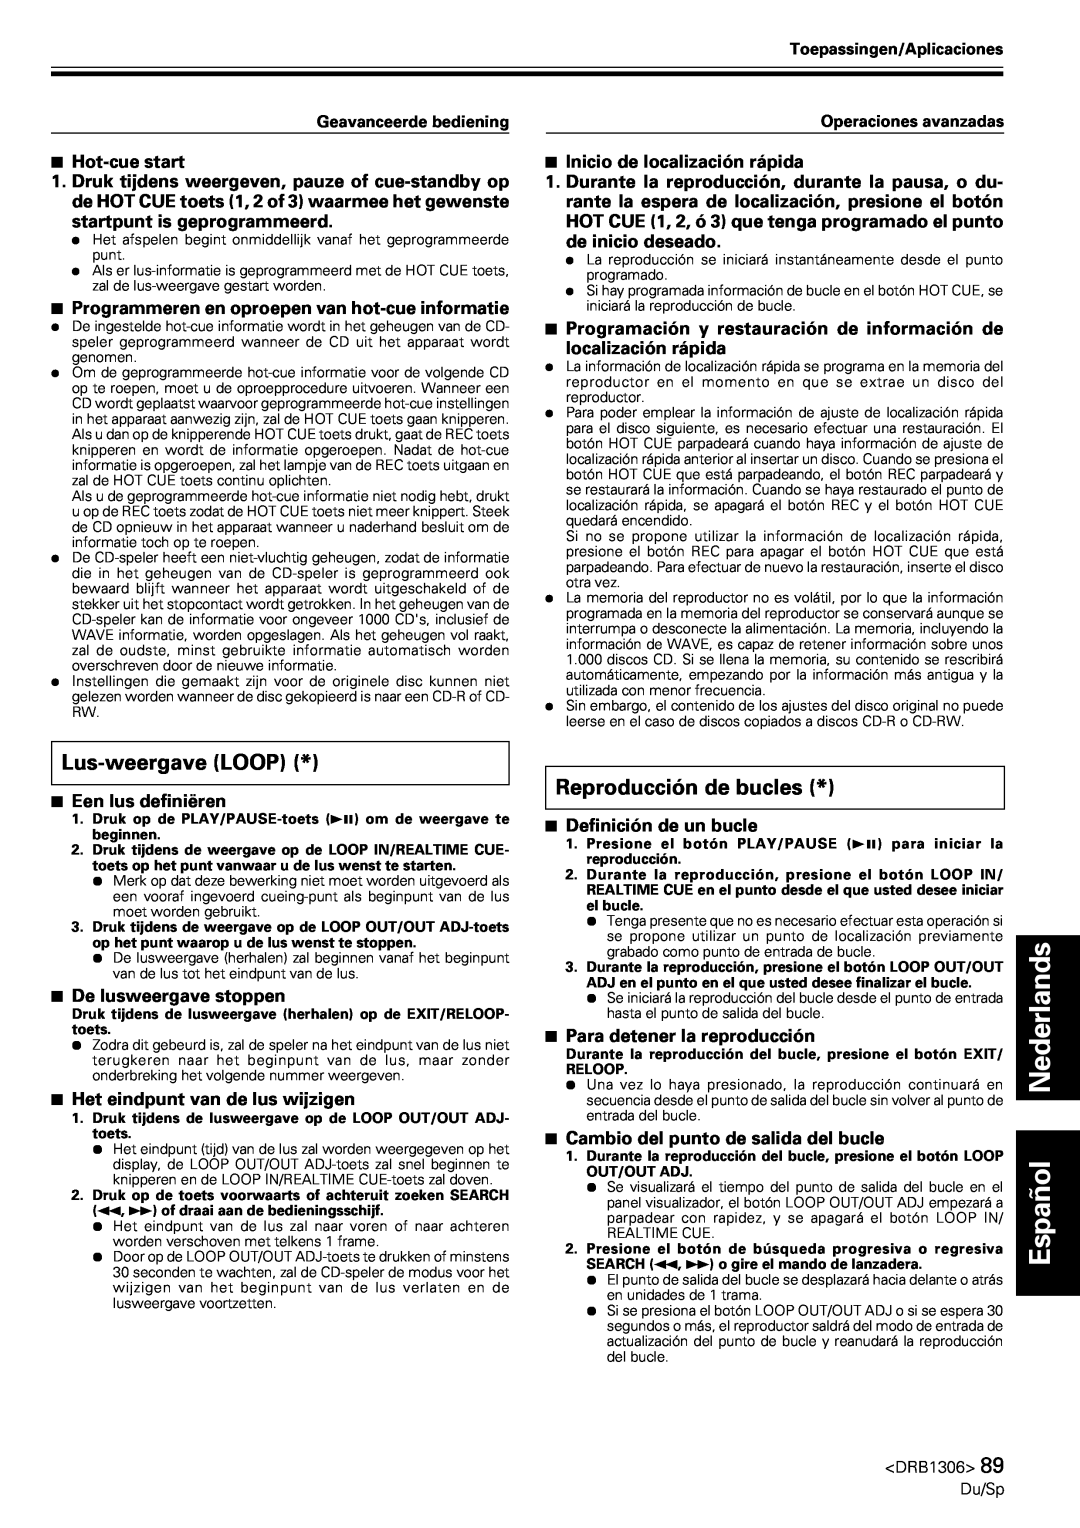 Pioneer CMX-3000 operating instructions Lus-weergaveLOOP, Reproducción de bucles, Español Nederlands 